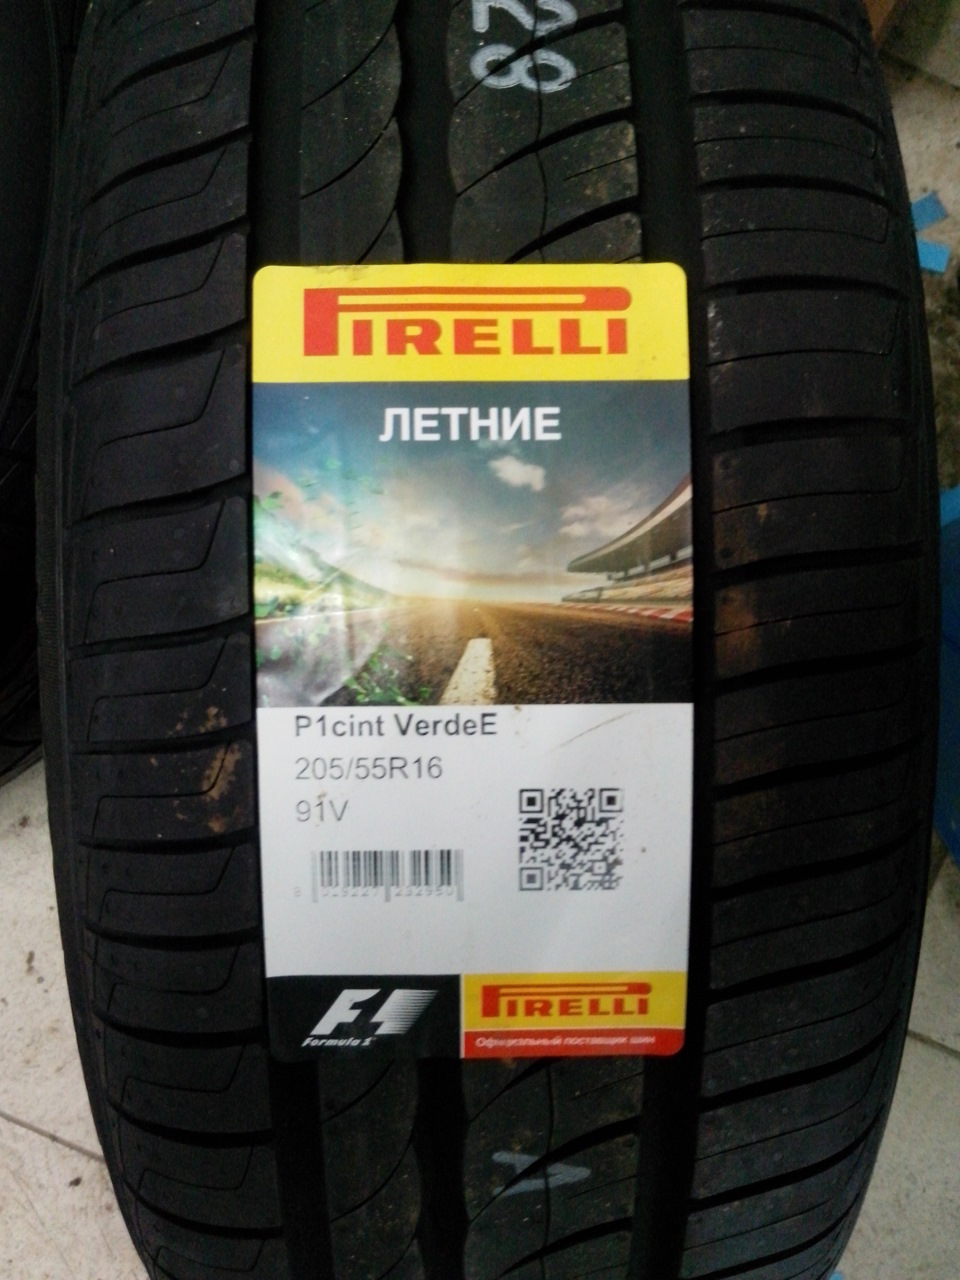 Пирелли центурато п 1. Pirelli 205/55r16 91v Cinturato p1 Verde TL. Pirelli p1 205/55 r16. Pirelli 205/55 r16 91v p1 Verde. Cinturato p1 205/55 r16.